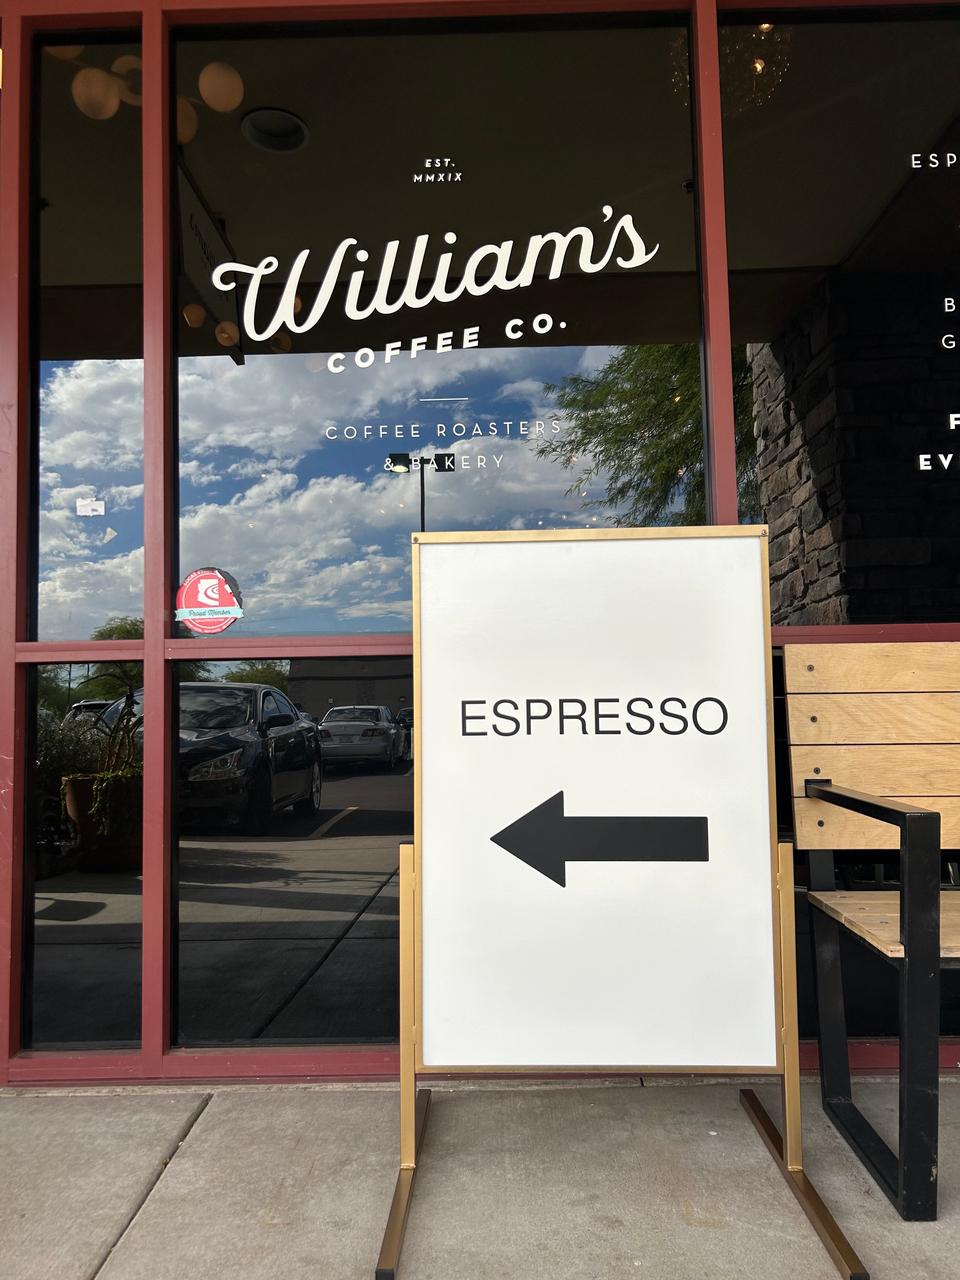 william's coffee co